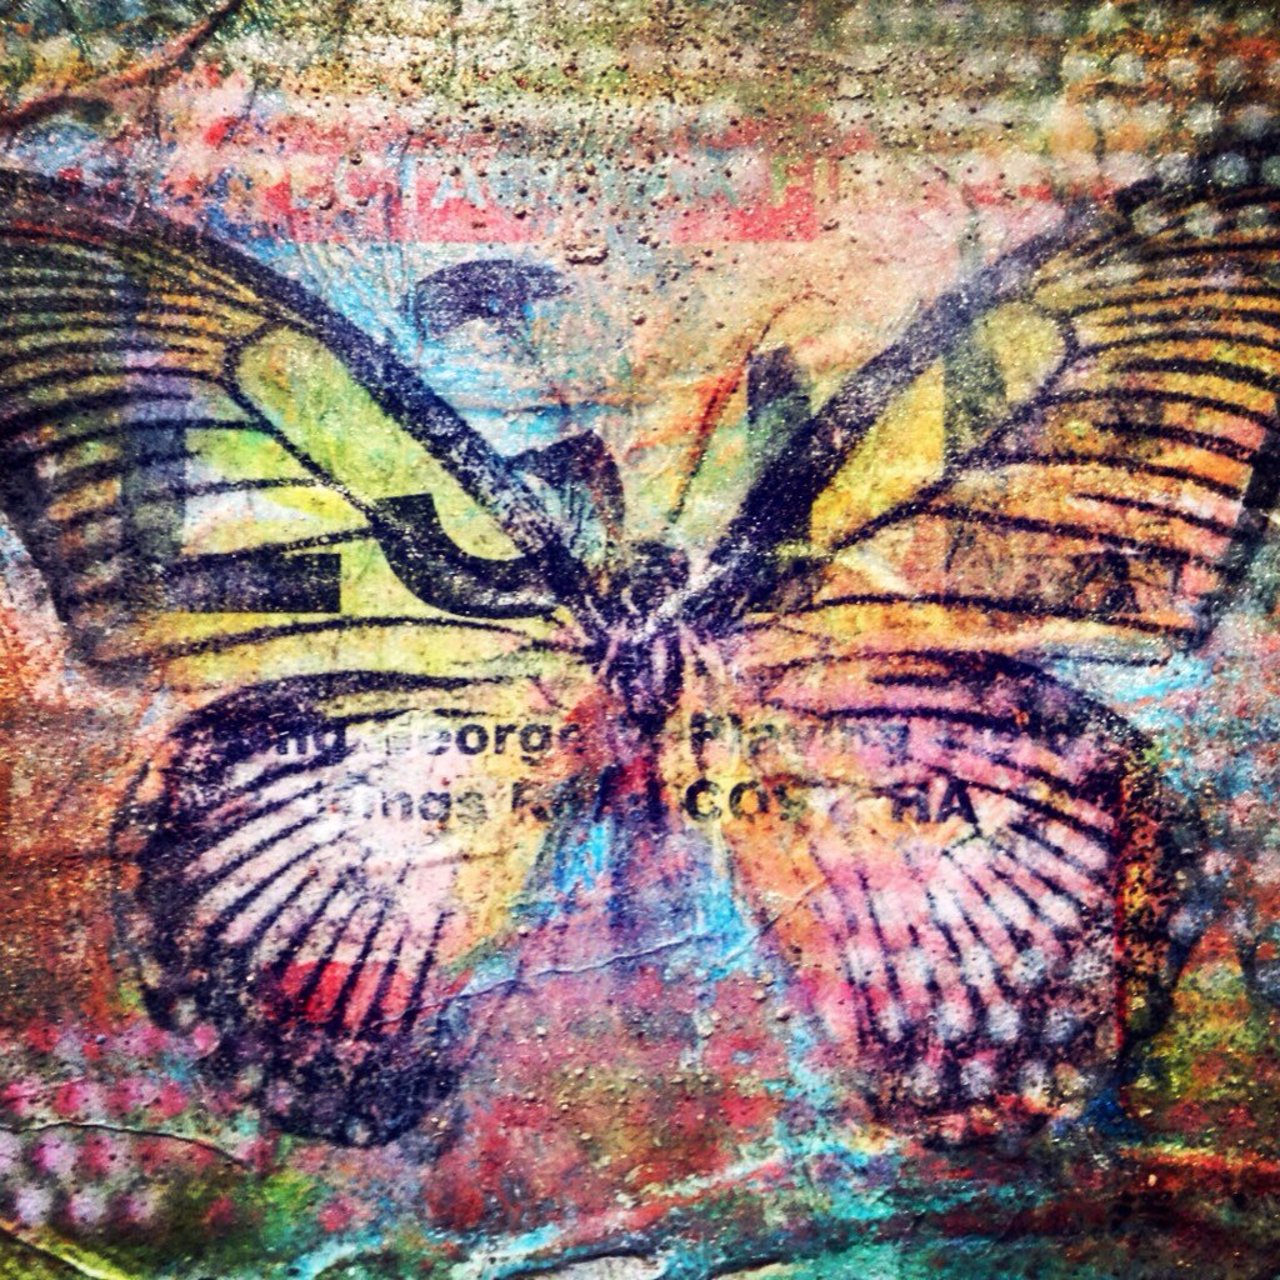 #Urban #Butterfly
#urbanart #urbanbutterfly #graffiti #streetart #spraypaint #stencil #mixedmedia #artist #mackman https://t.co/HVUqX2zZqC